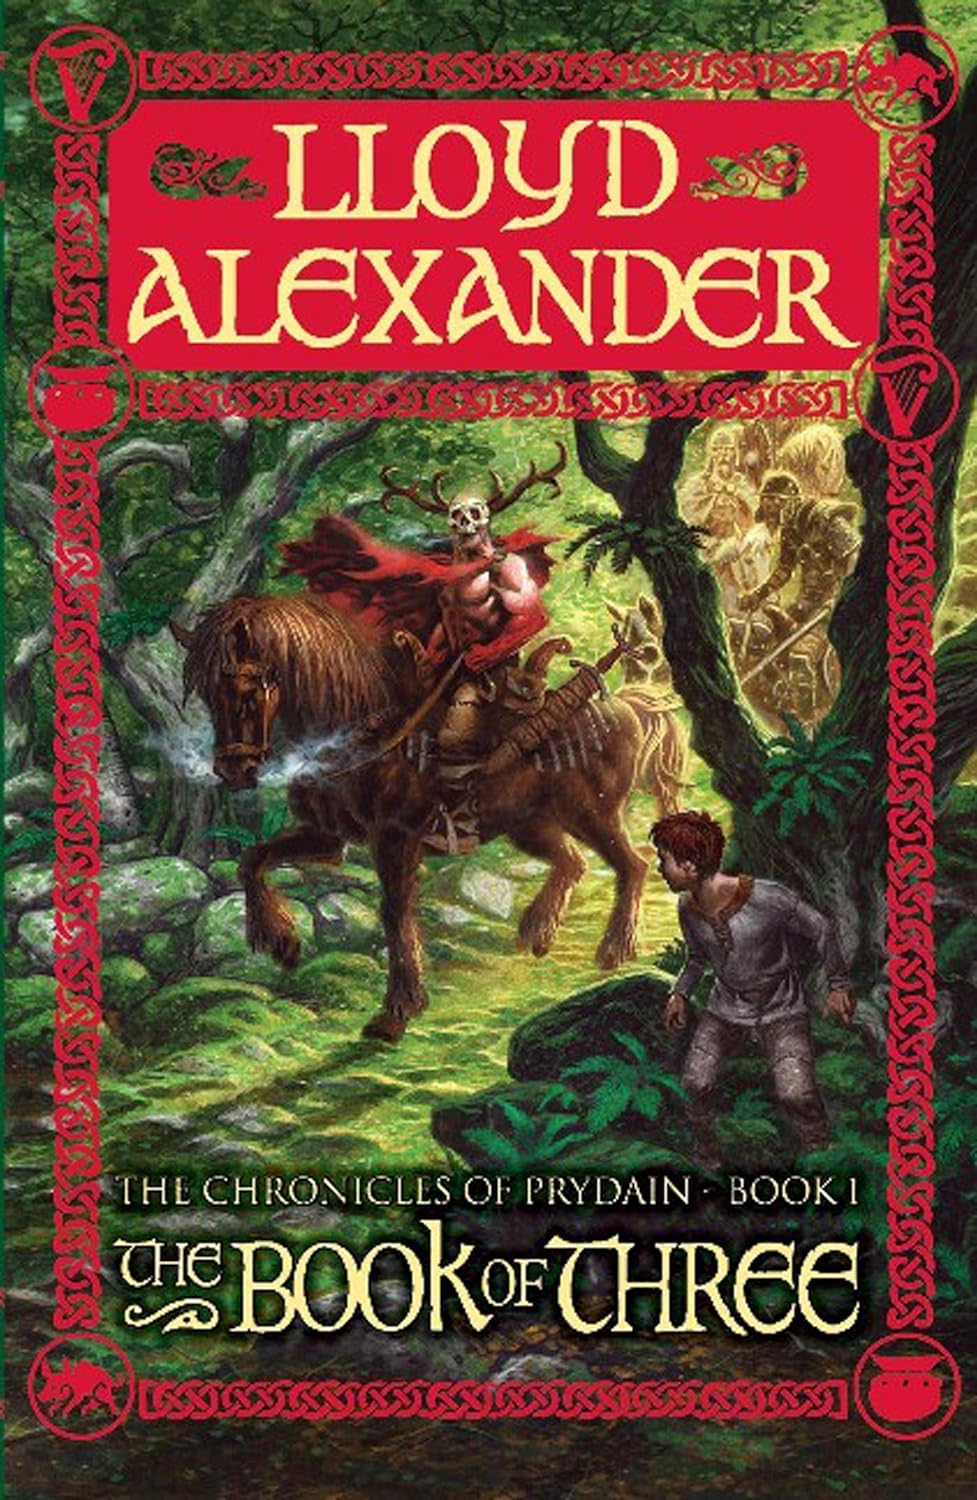 The Book of Three – Lloyd Alexander